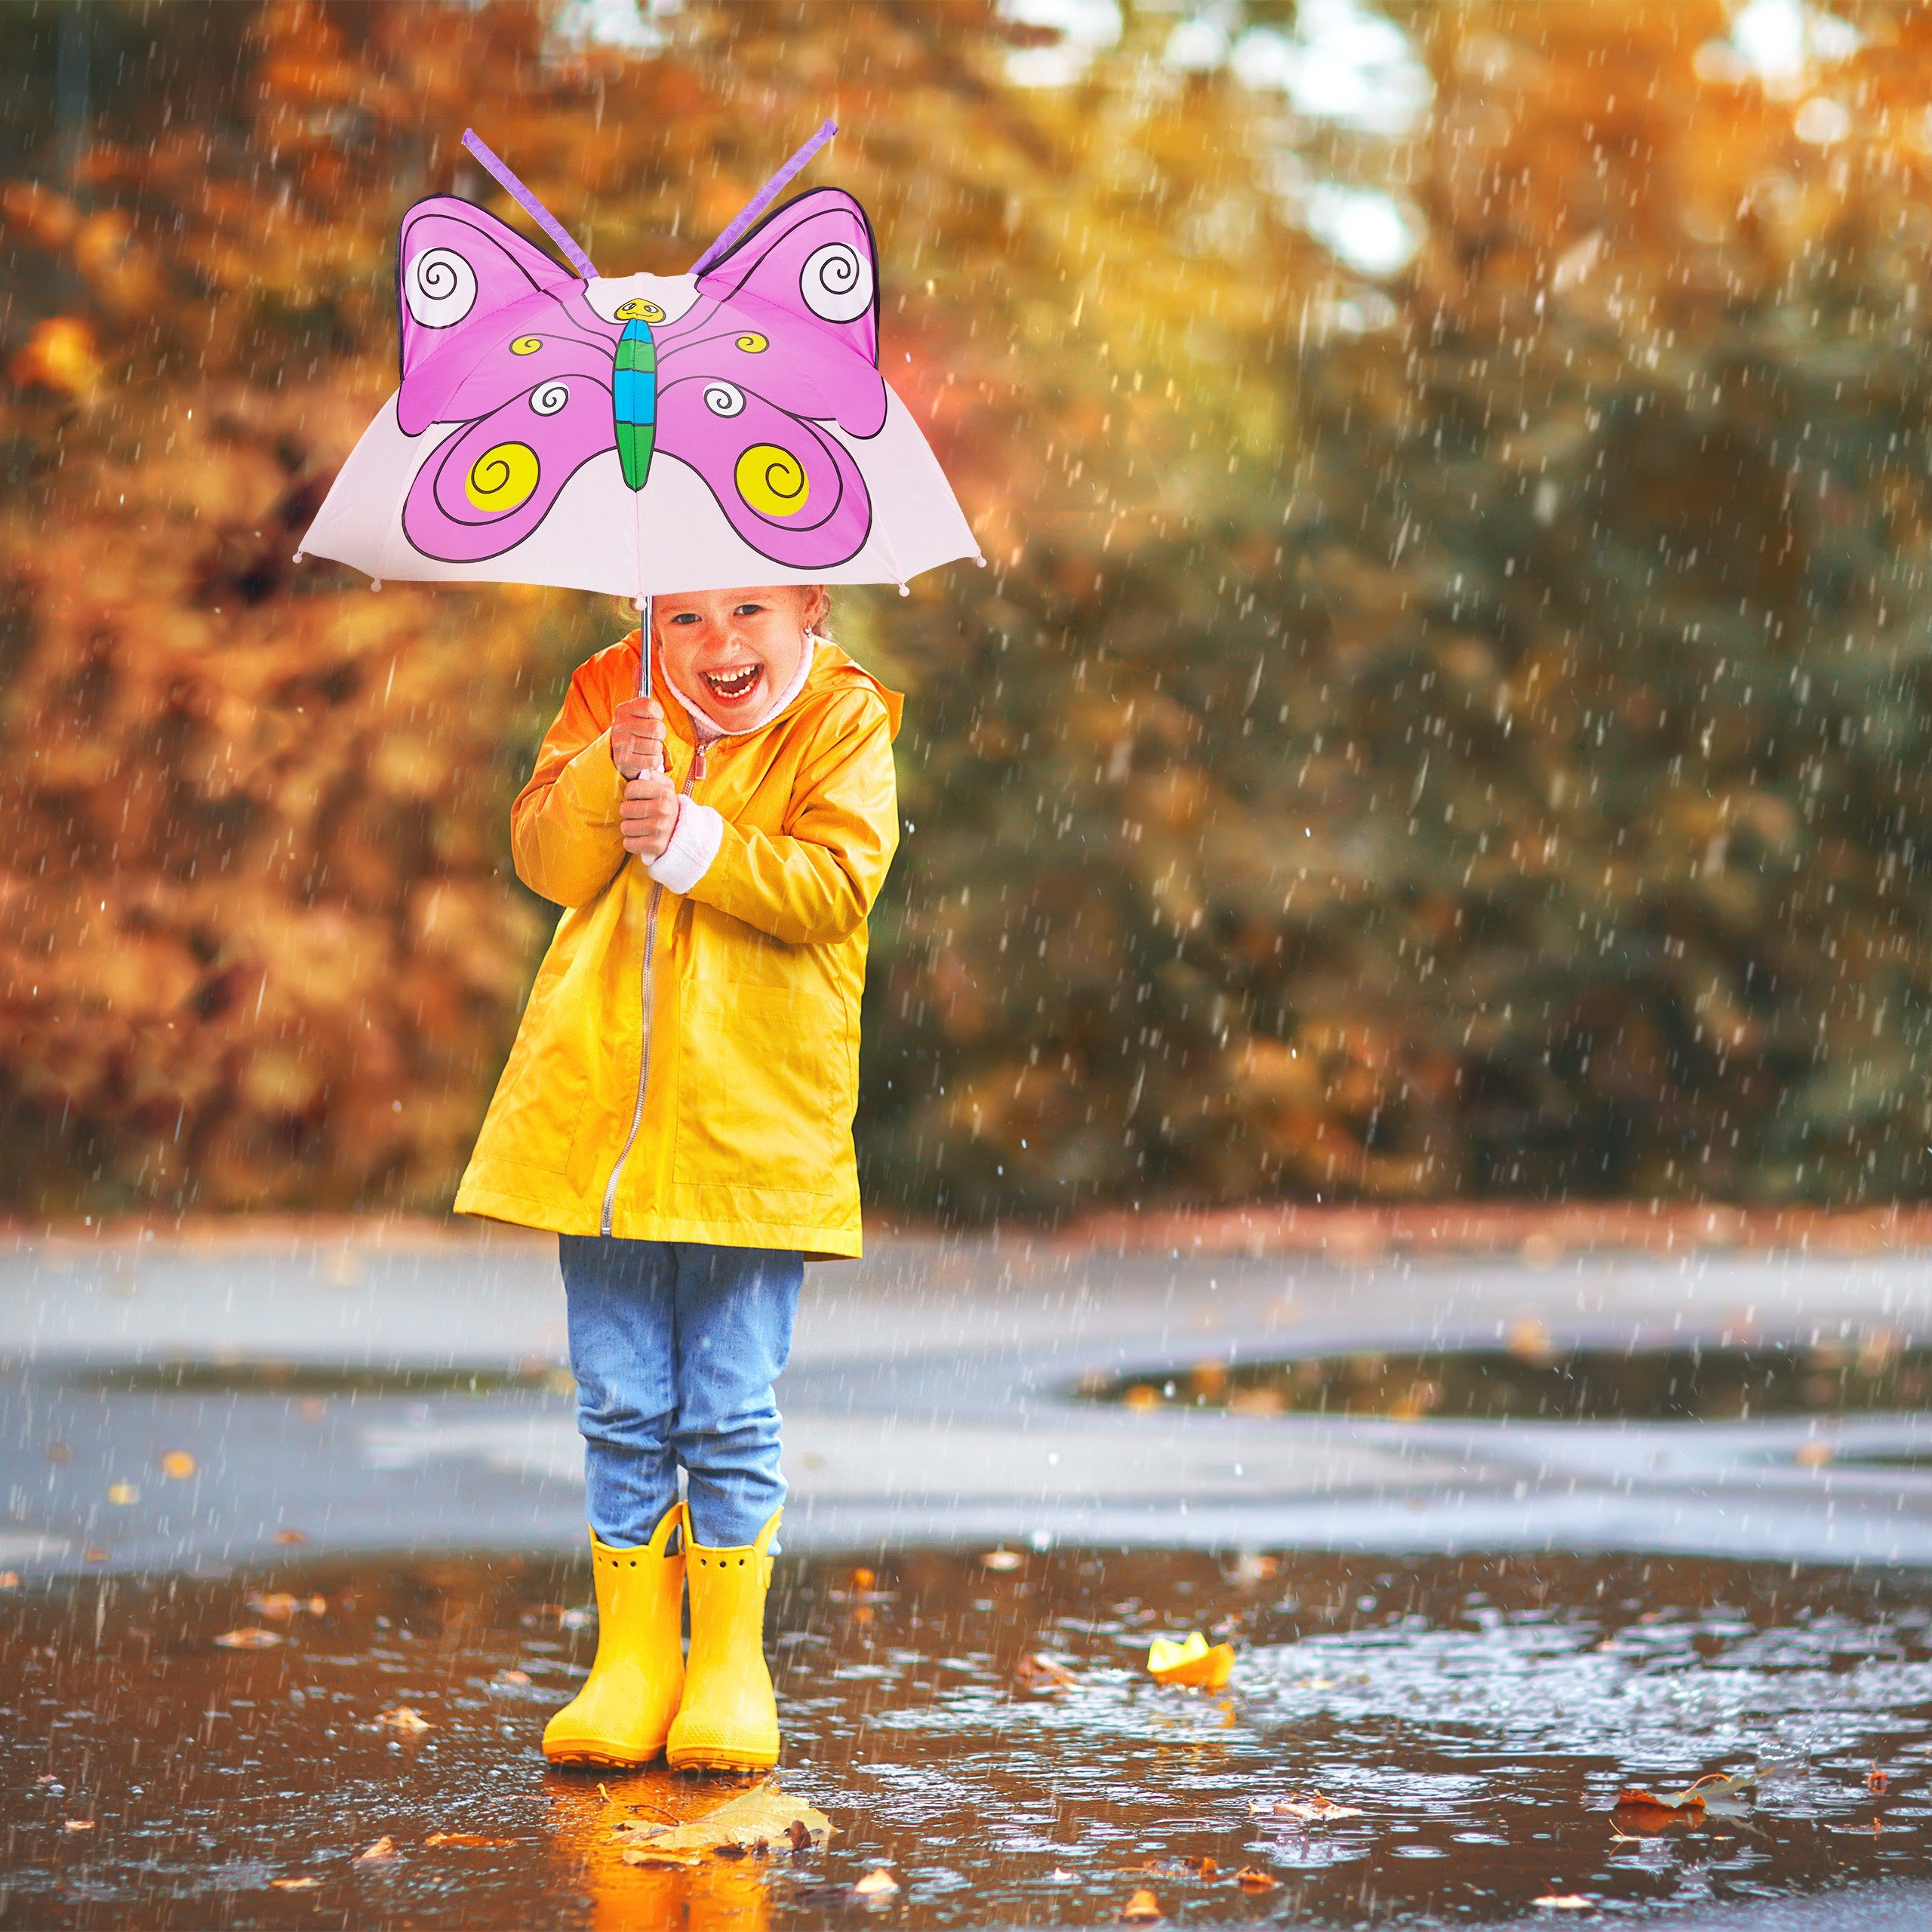 Stockregenschirm 3D relaxdays Rosa Kinderregenschirm Lila mit Motiv, Pink Schmetterling